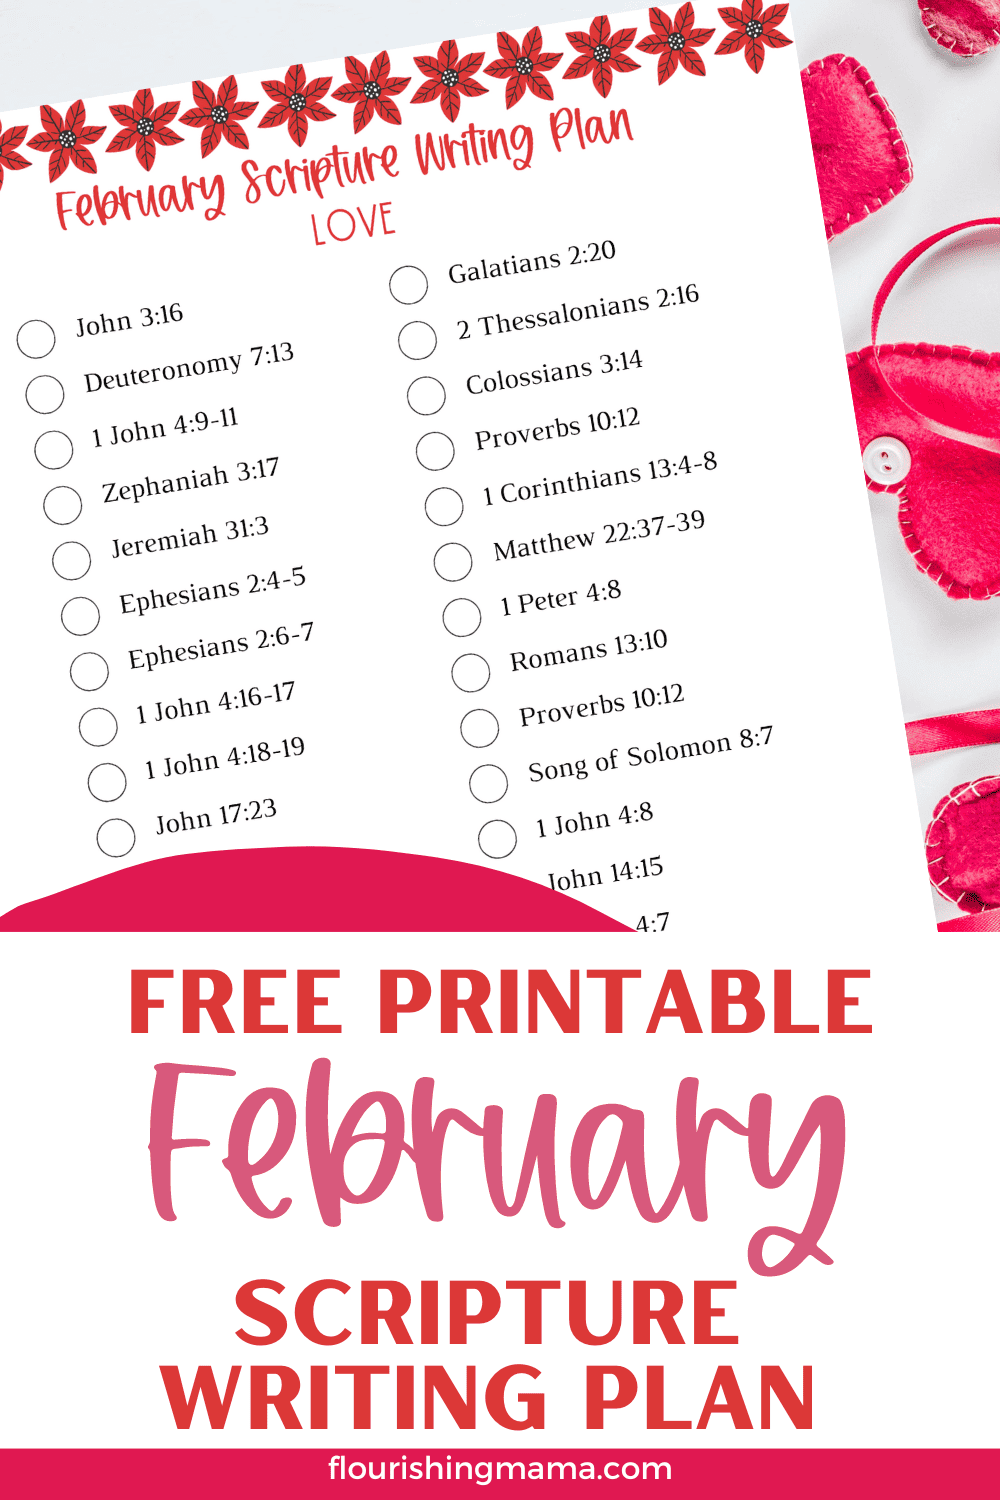 Free Printable February Scripture Writing Plan | Flourishing Mama